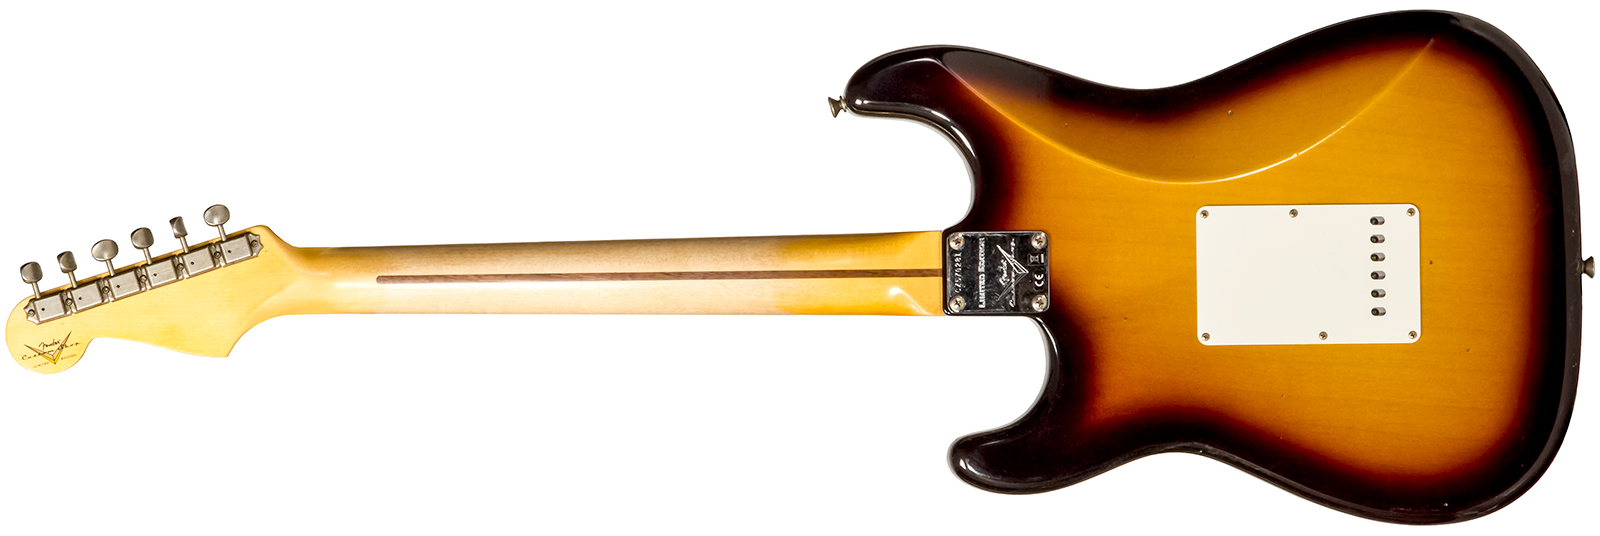 Fender Custom Shop Strat 1956 3s Trem Mn #cz570281 - Journeyman Relic Aged 2-color Sunburst - Elektrische gitaar in Str-vorm - Variation 1